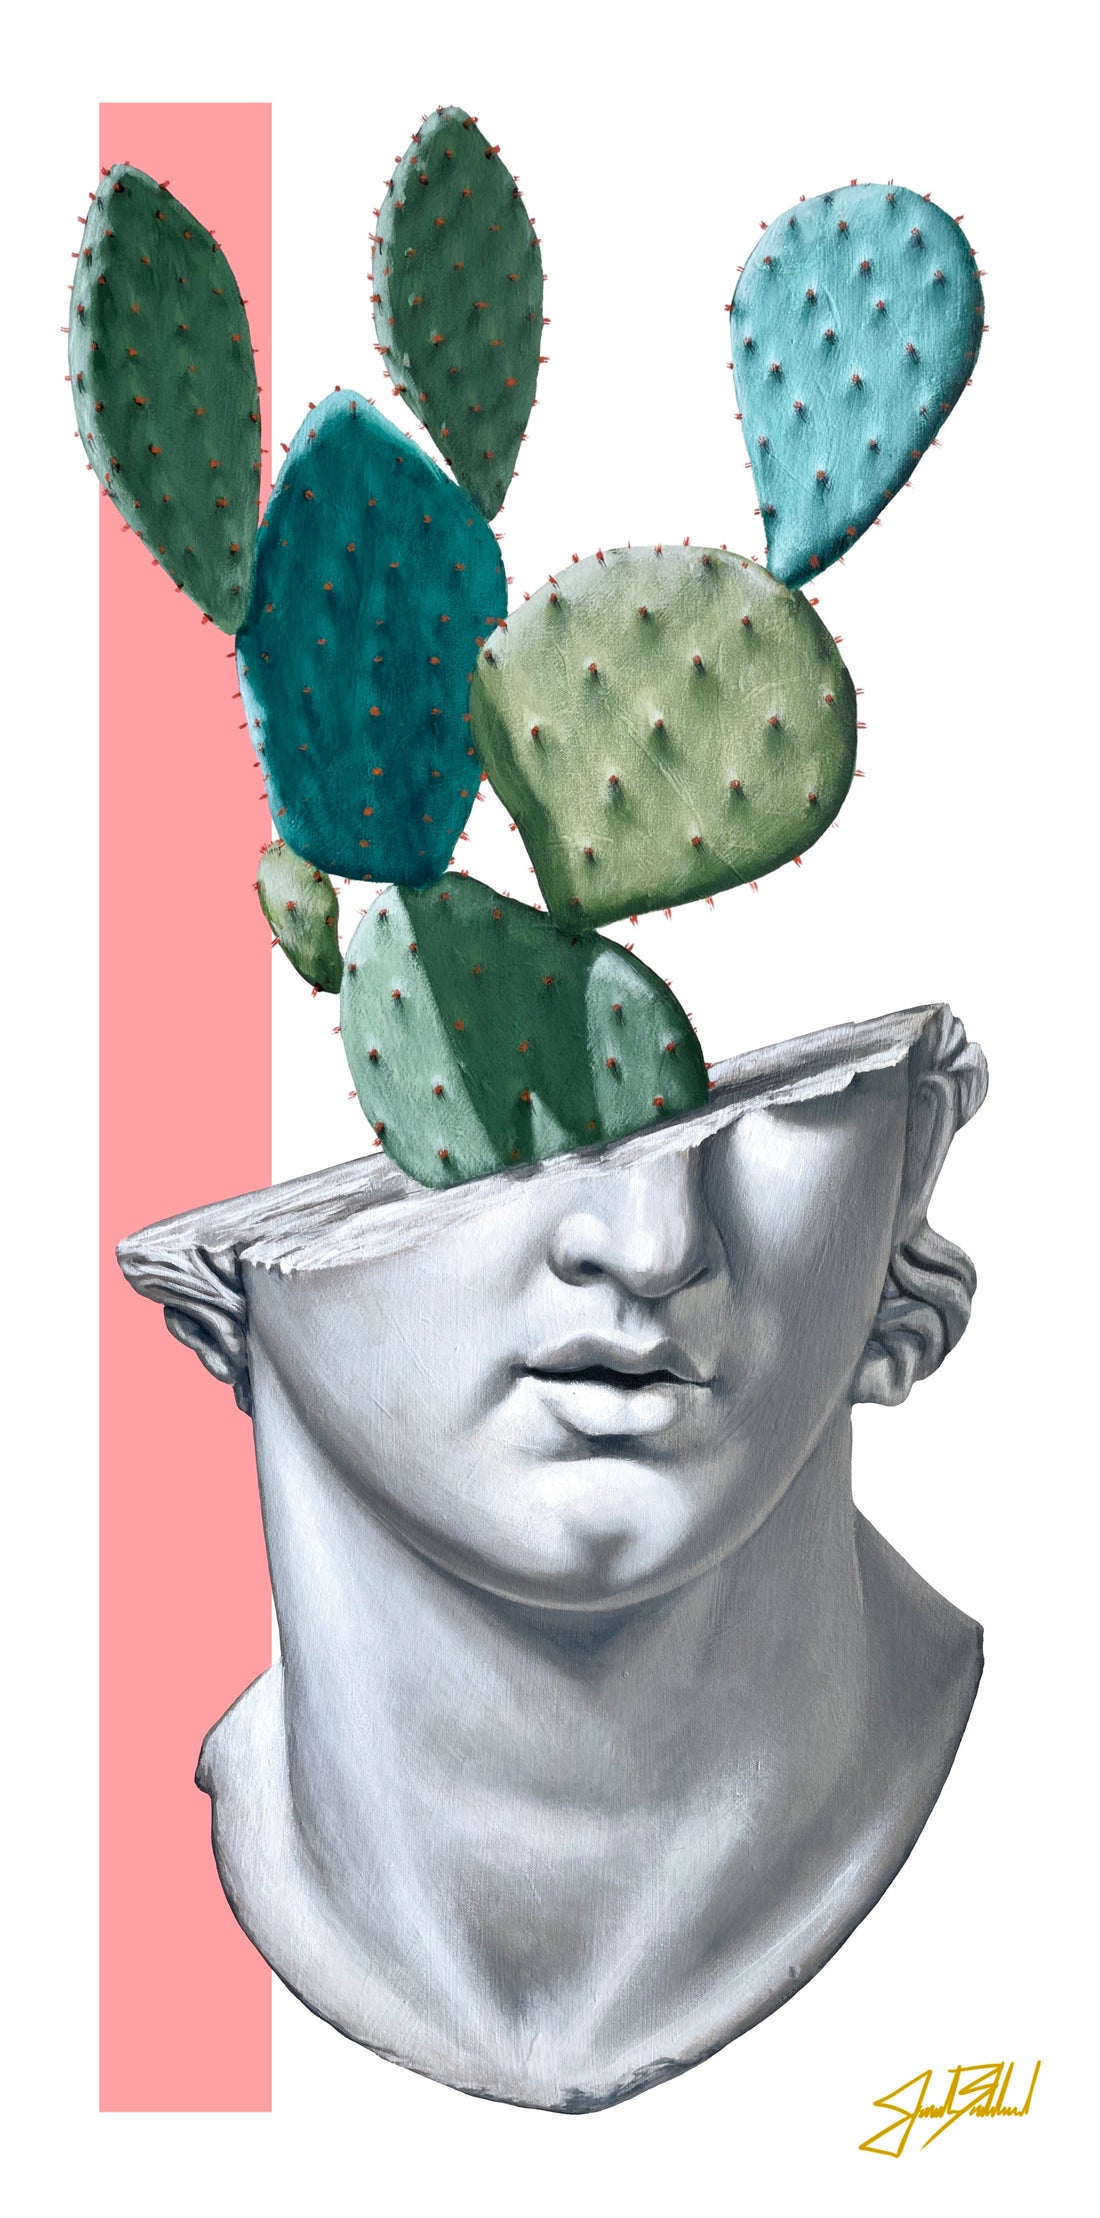 Colossal Cactus Head